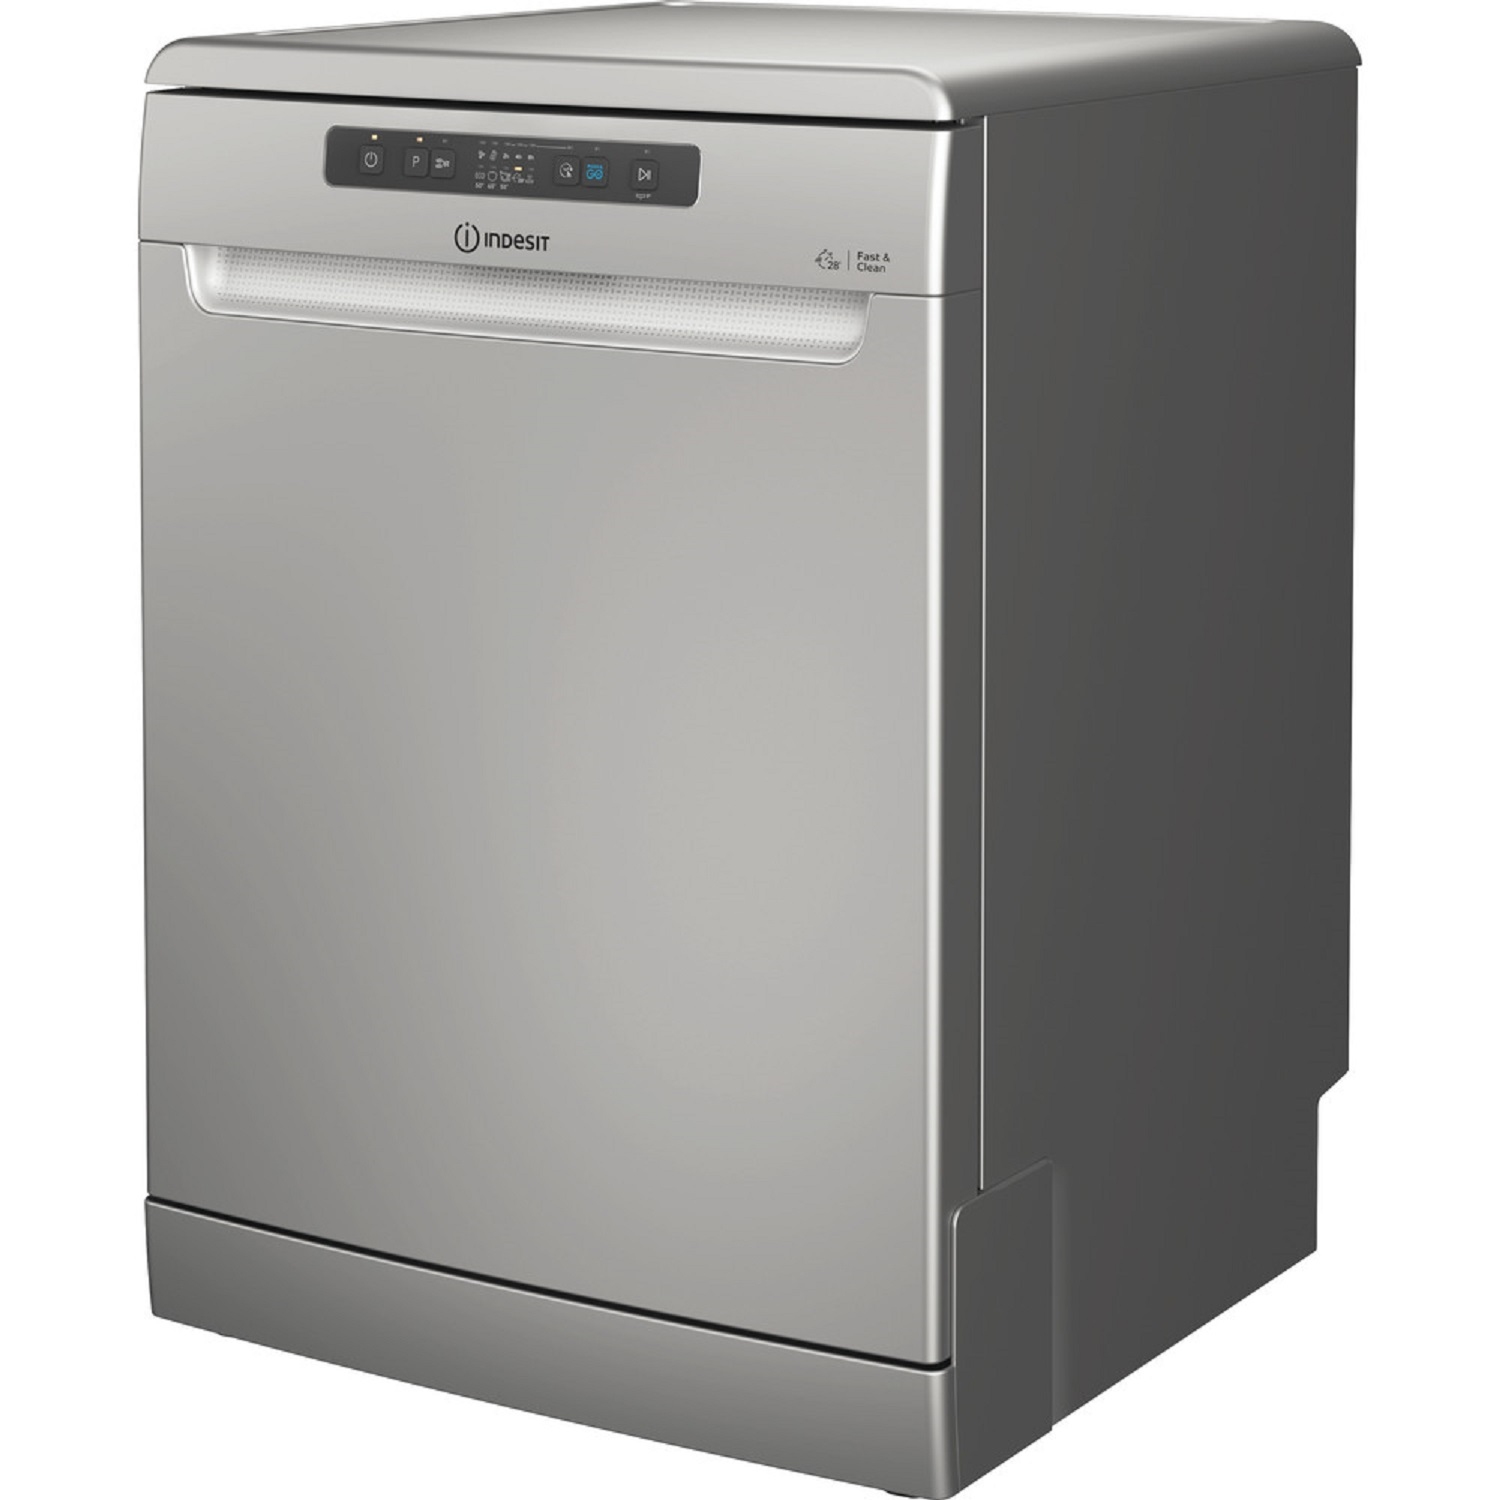 Indesit Fullsize Dishwasher 60cm Silver - 0